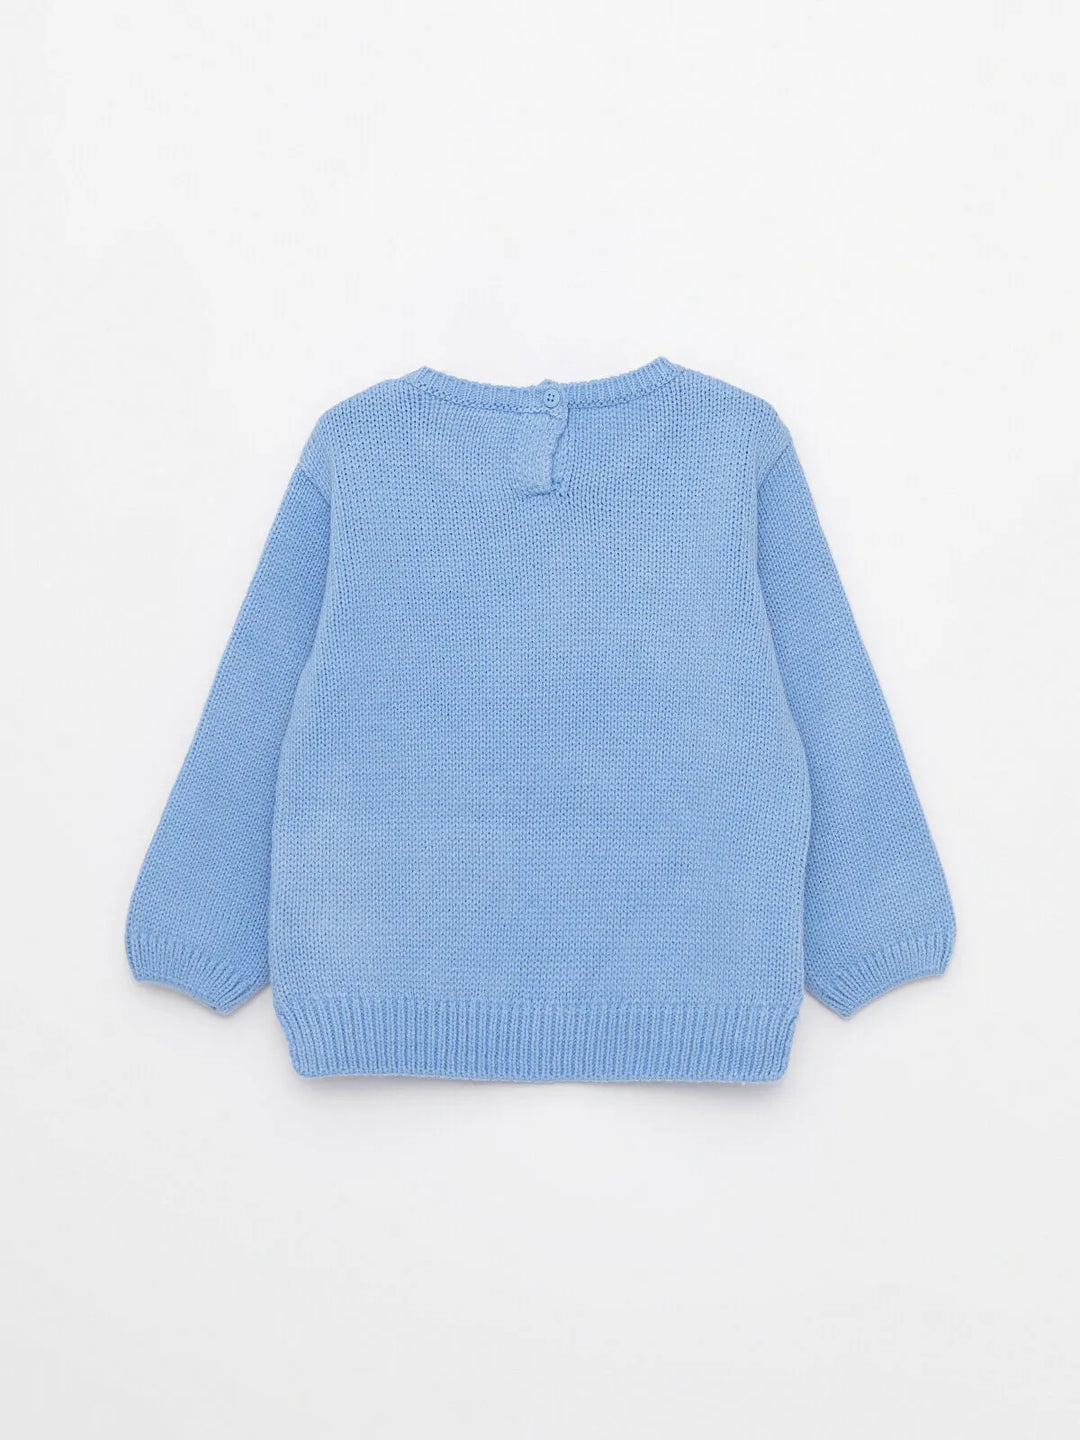 Crew Neck Long Sleeve Basic Baby Girls Knitwear Sweater